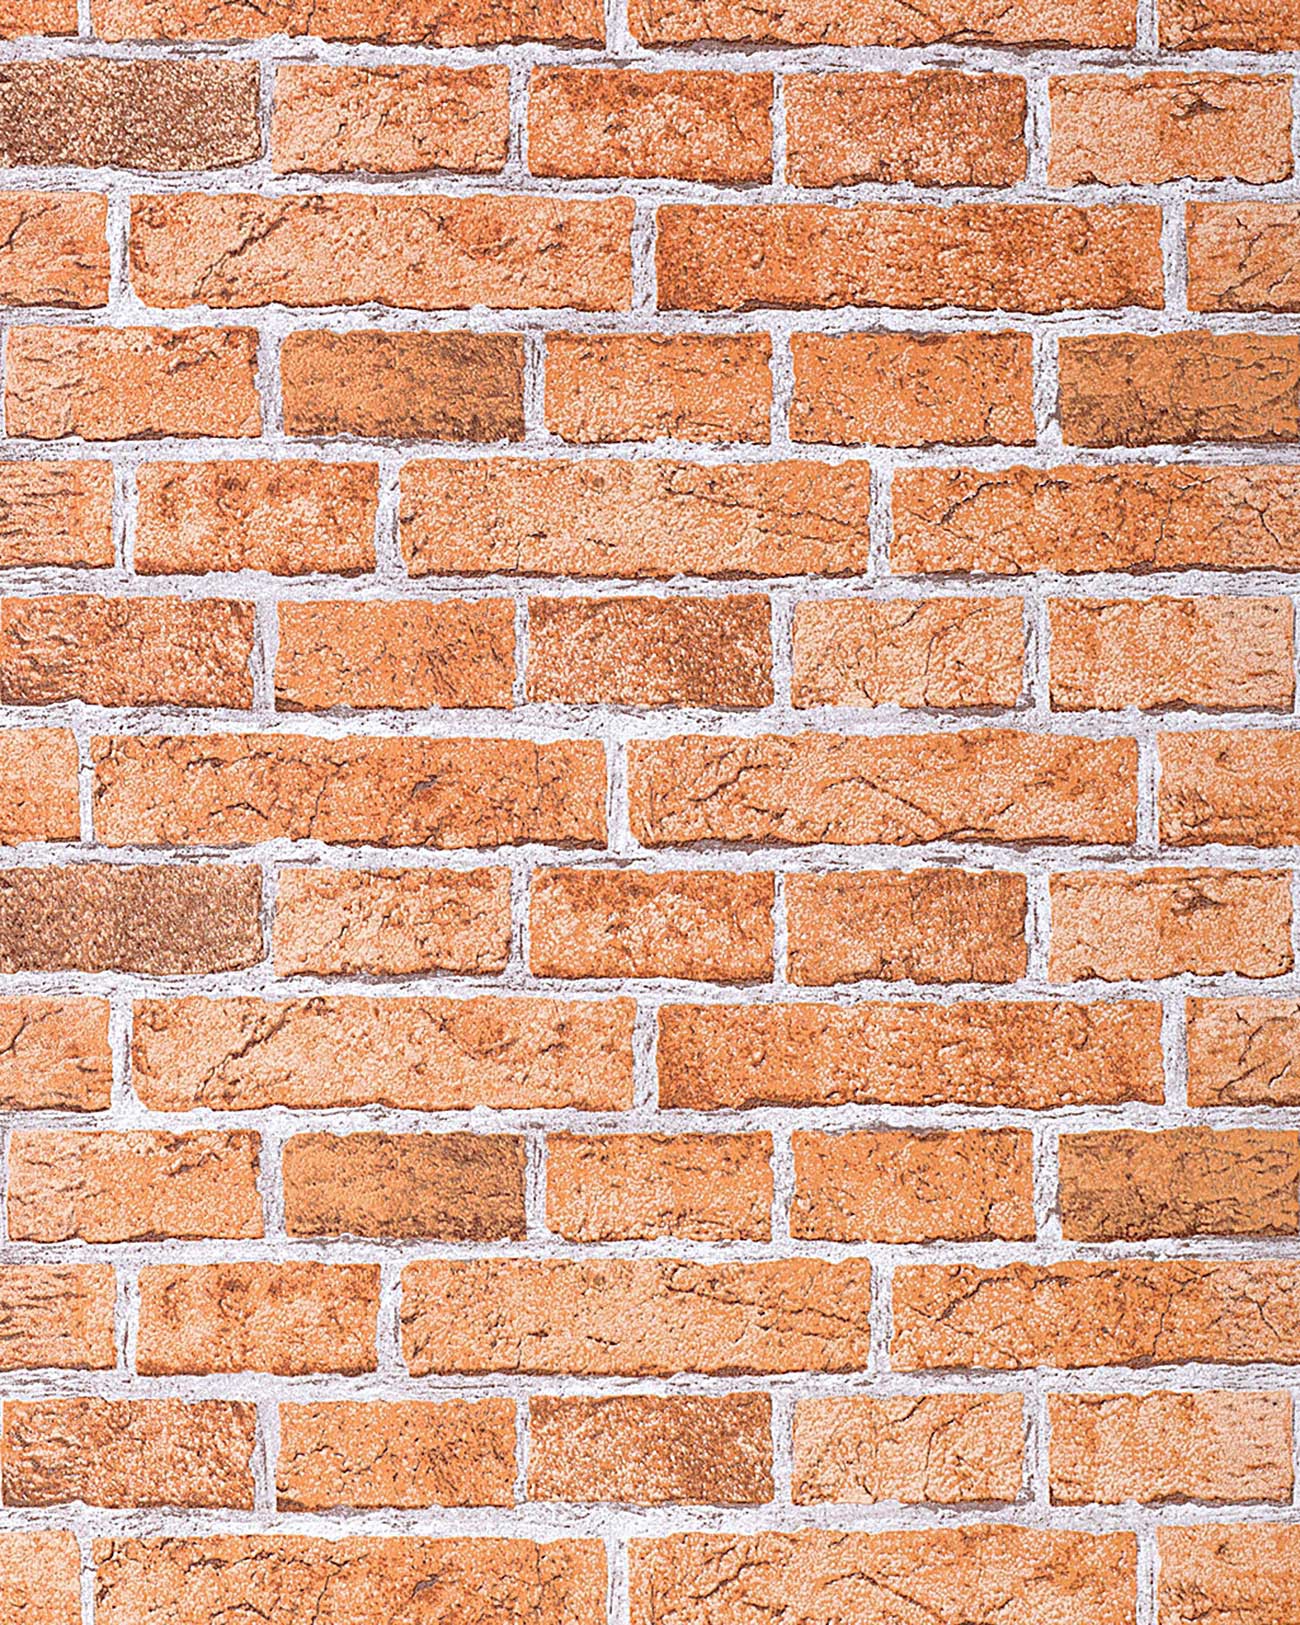 Design Brick Wallpaper Decor Vintage Stone Look Brown Qm